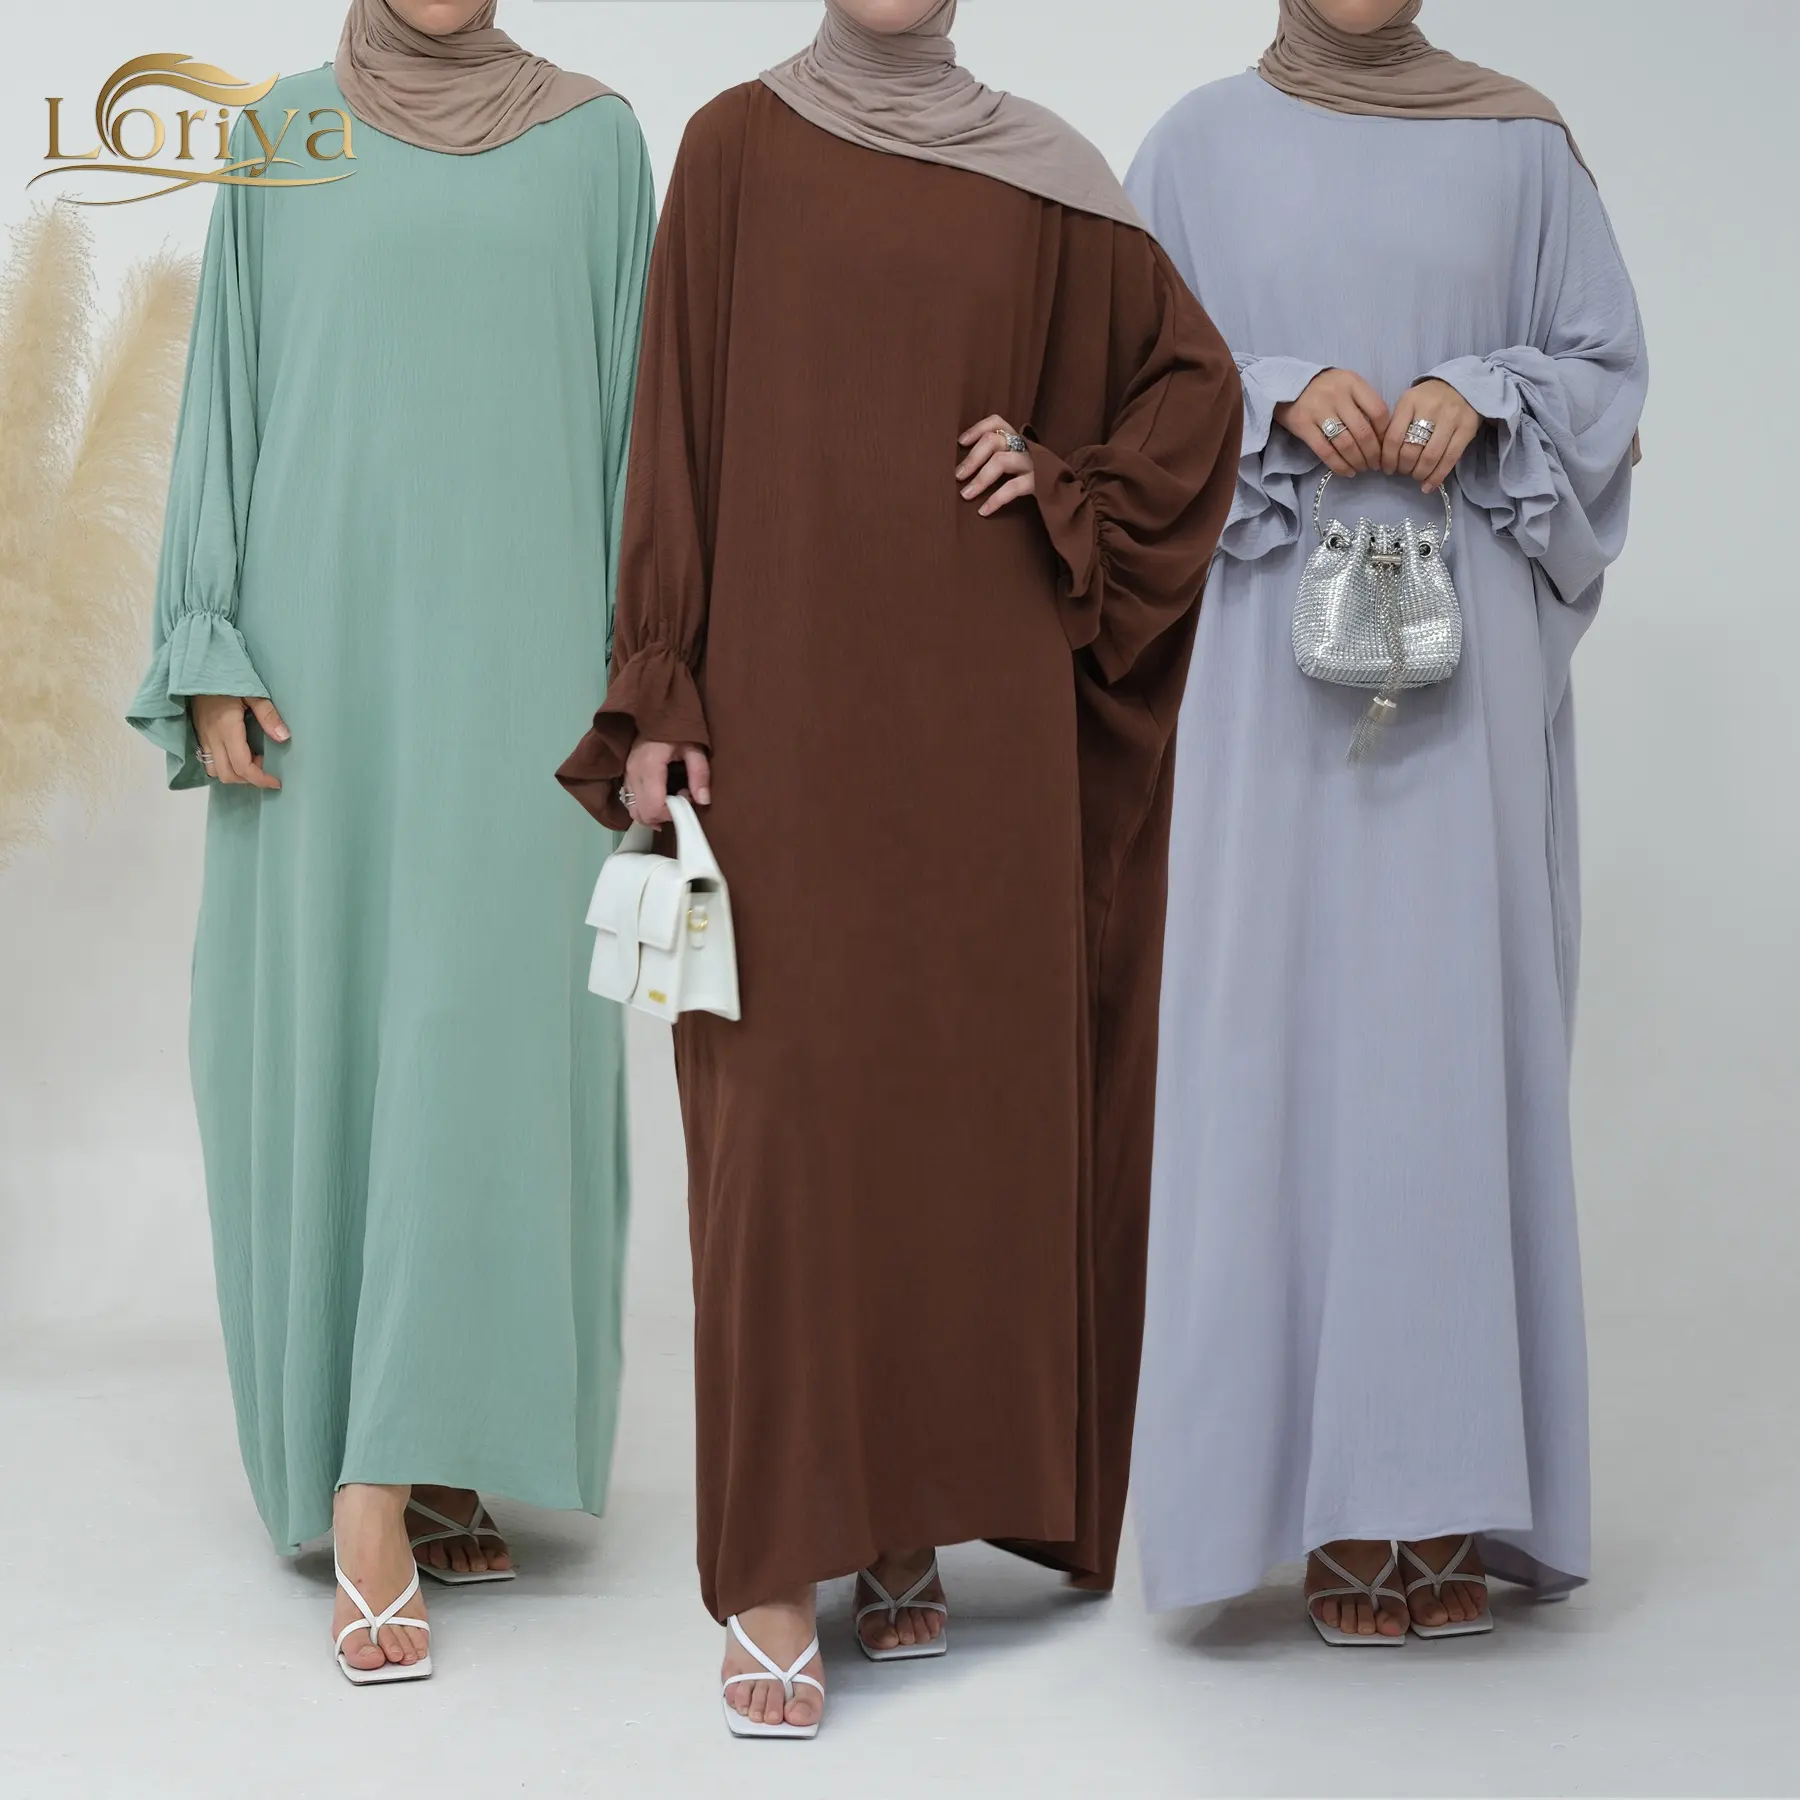 Loriya Jazz Stof Abaya Effen Kleur Plus Size Abaya Bescheiden Moslim Vrouwen Jurken Traditionele Moslim Kleding En Accessoires